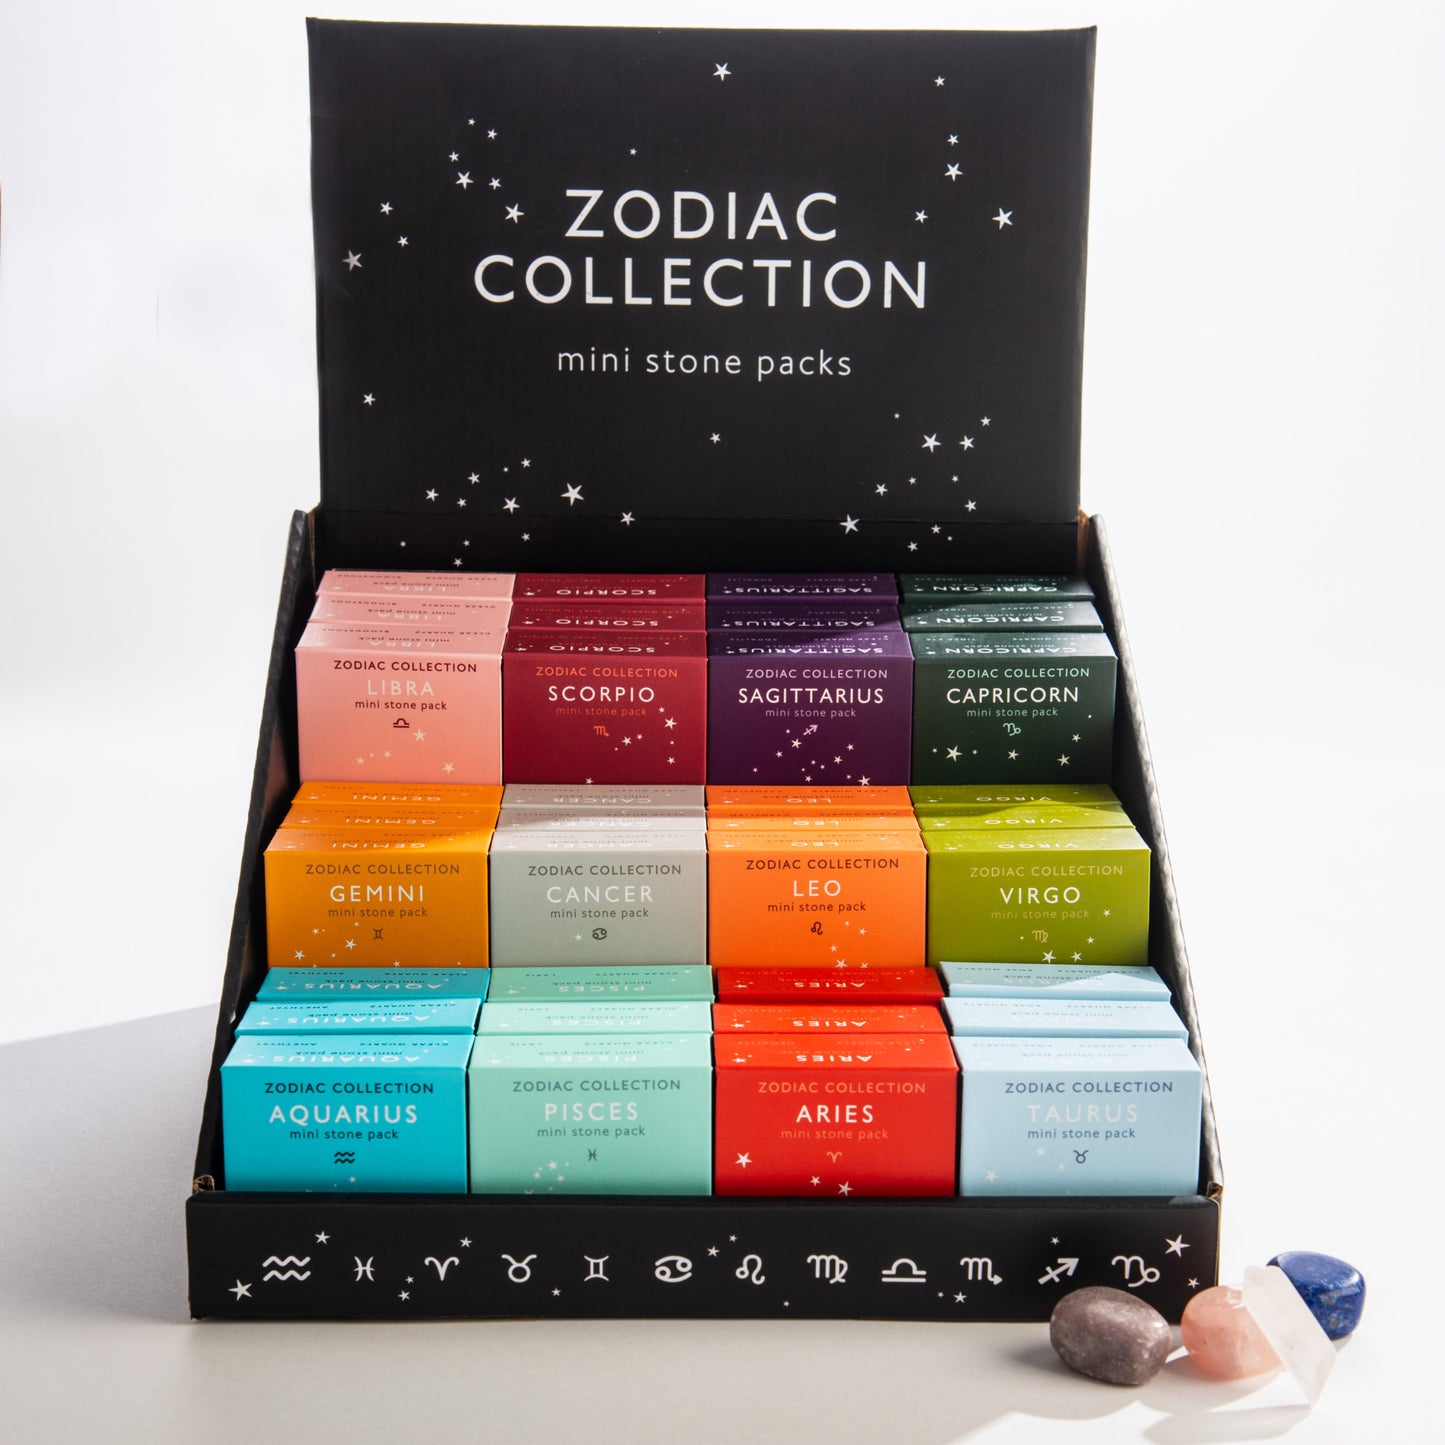 Aries - Zodiac Collection Mini Stone Pack [Mar. 21 - Apr. 19]